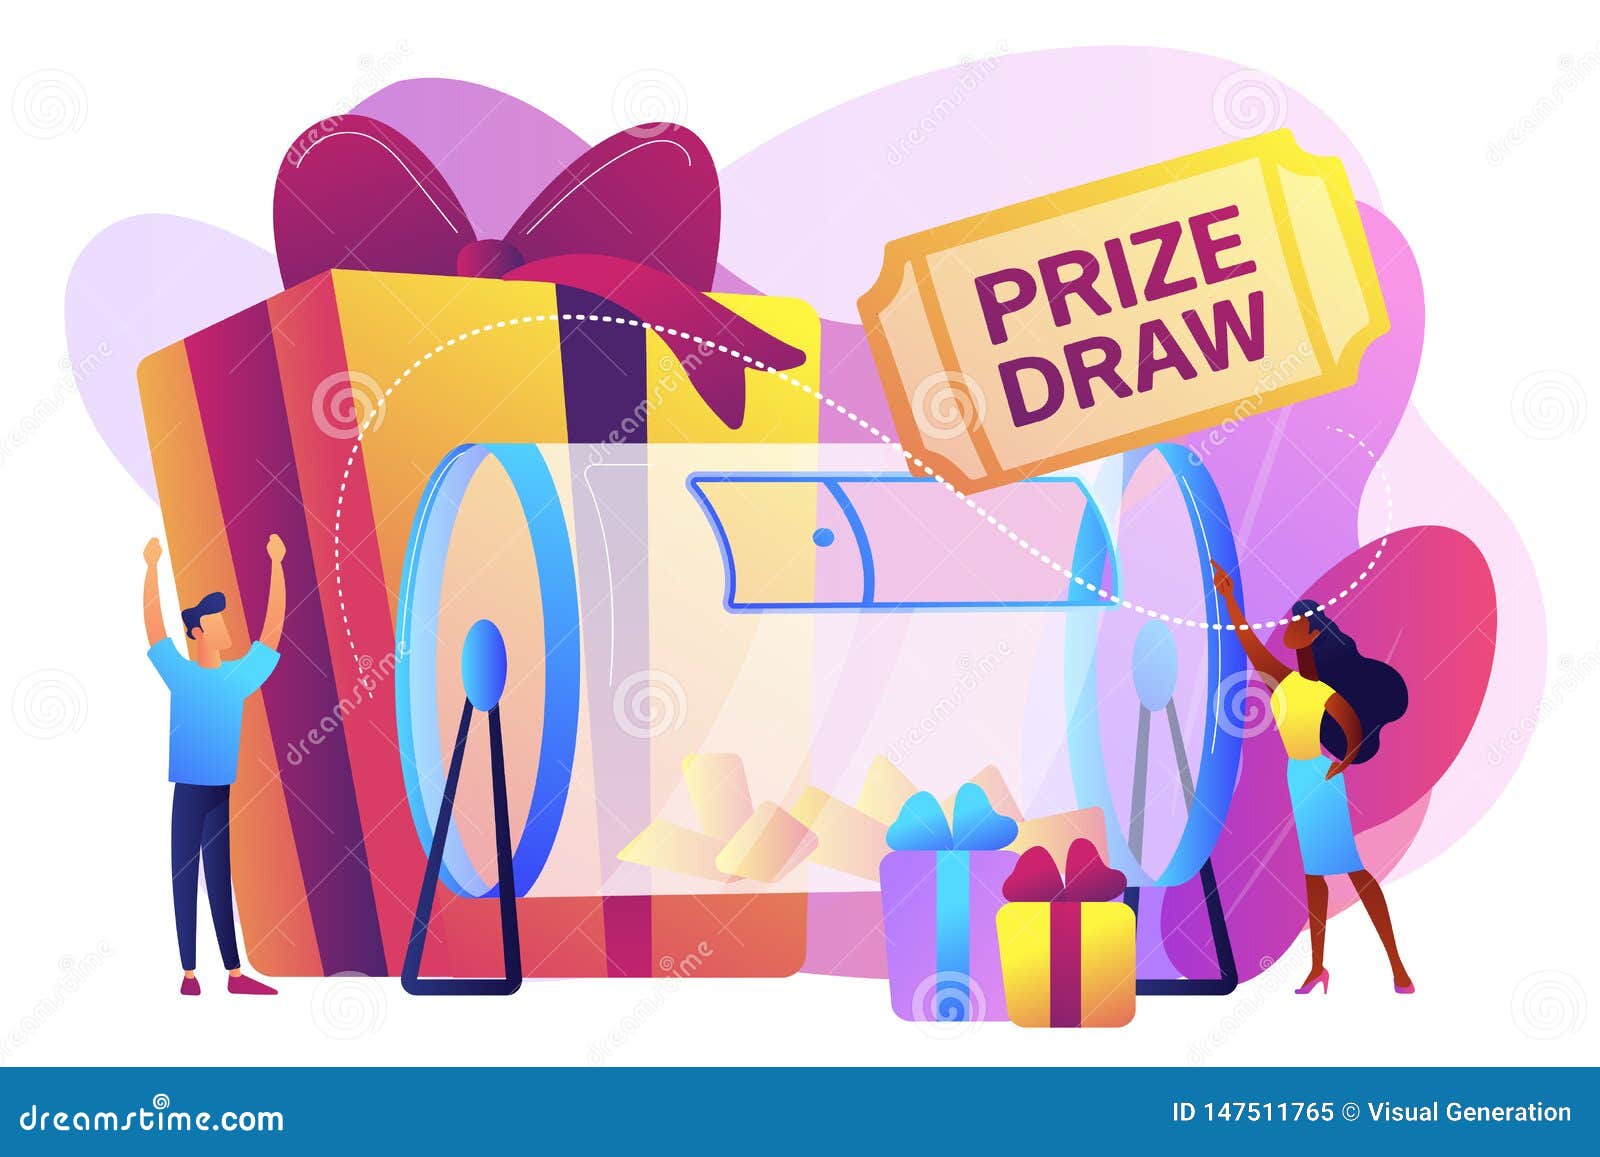 Lucky Draw - Entrepreneur - Lucky draw | LinkedIn-saigonsouth.com.vn